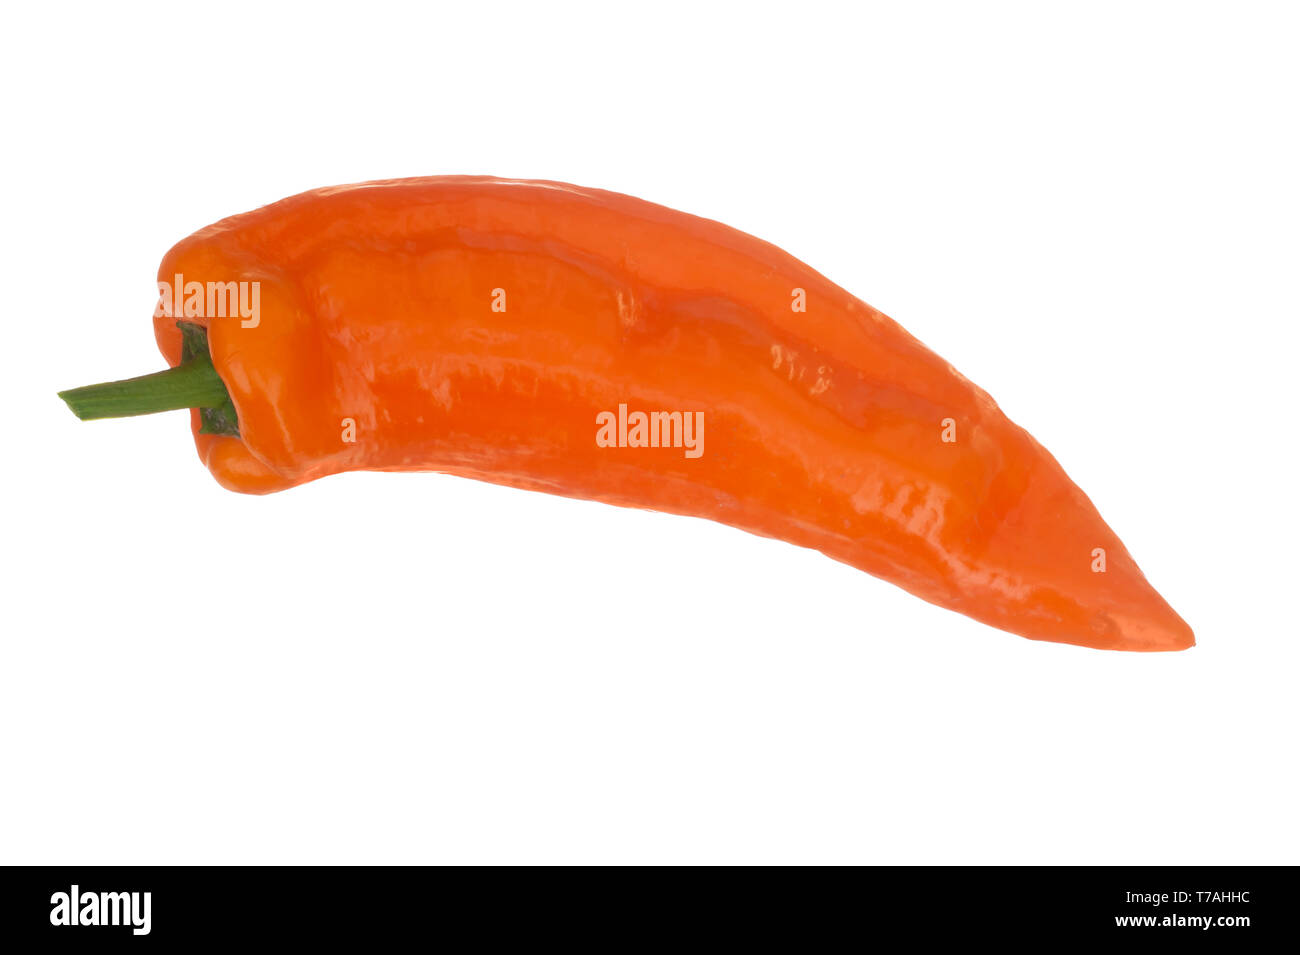 Orange colour Cubanelle sweet pepper isolated on white background. Capsicum annuum. Aka Italian frying pepper. Stock Photo